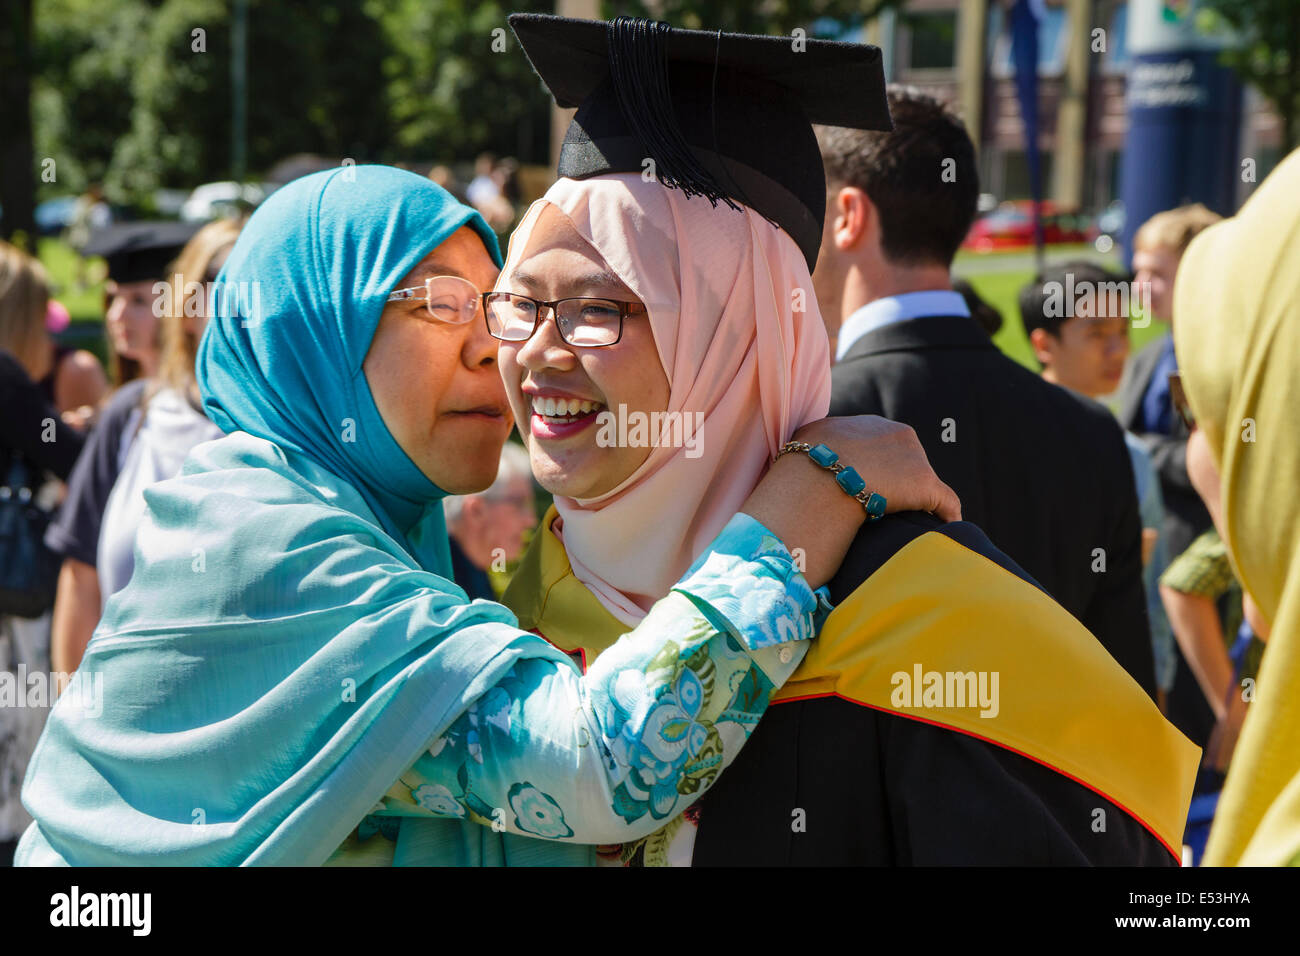 Female international student is congratulated at a university graduation, Keele University, UK Stock Photo